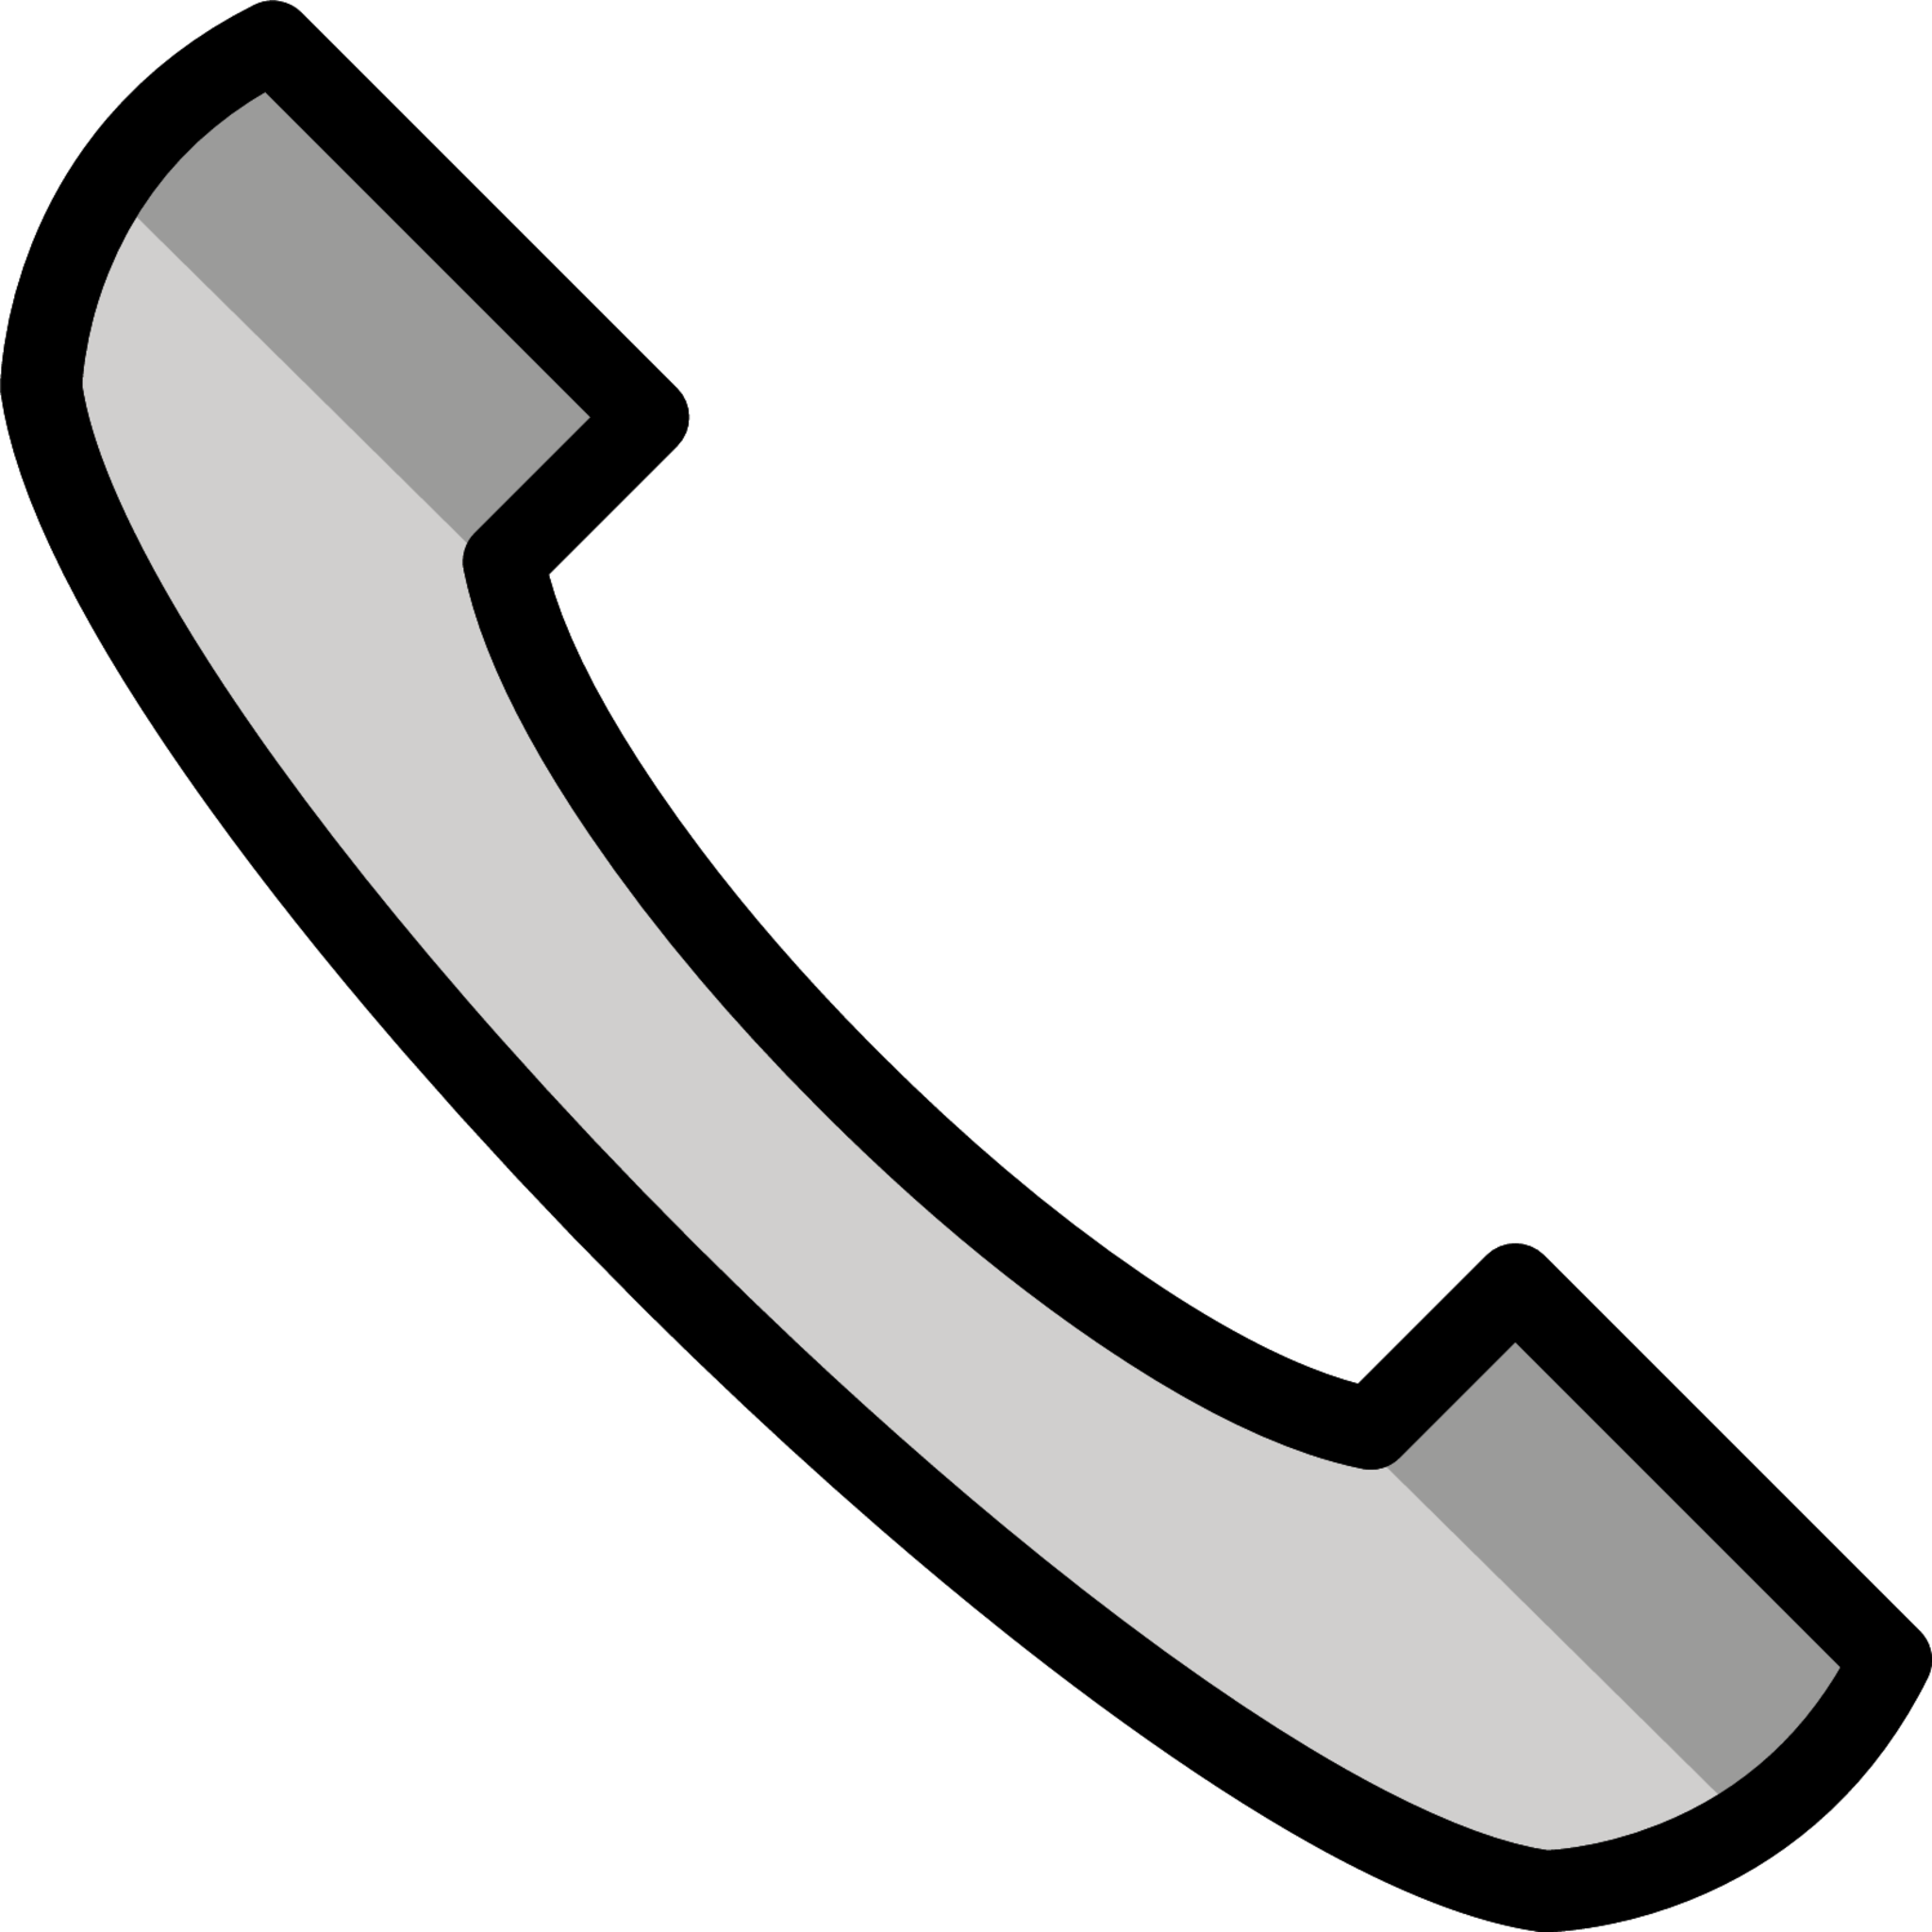 telephone logo black and white